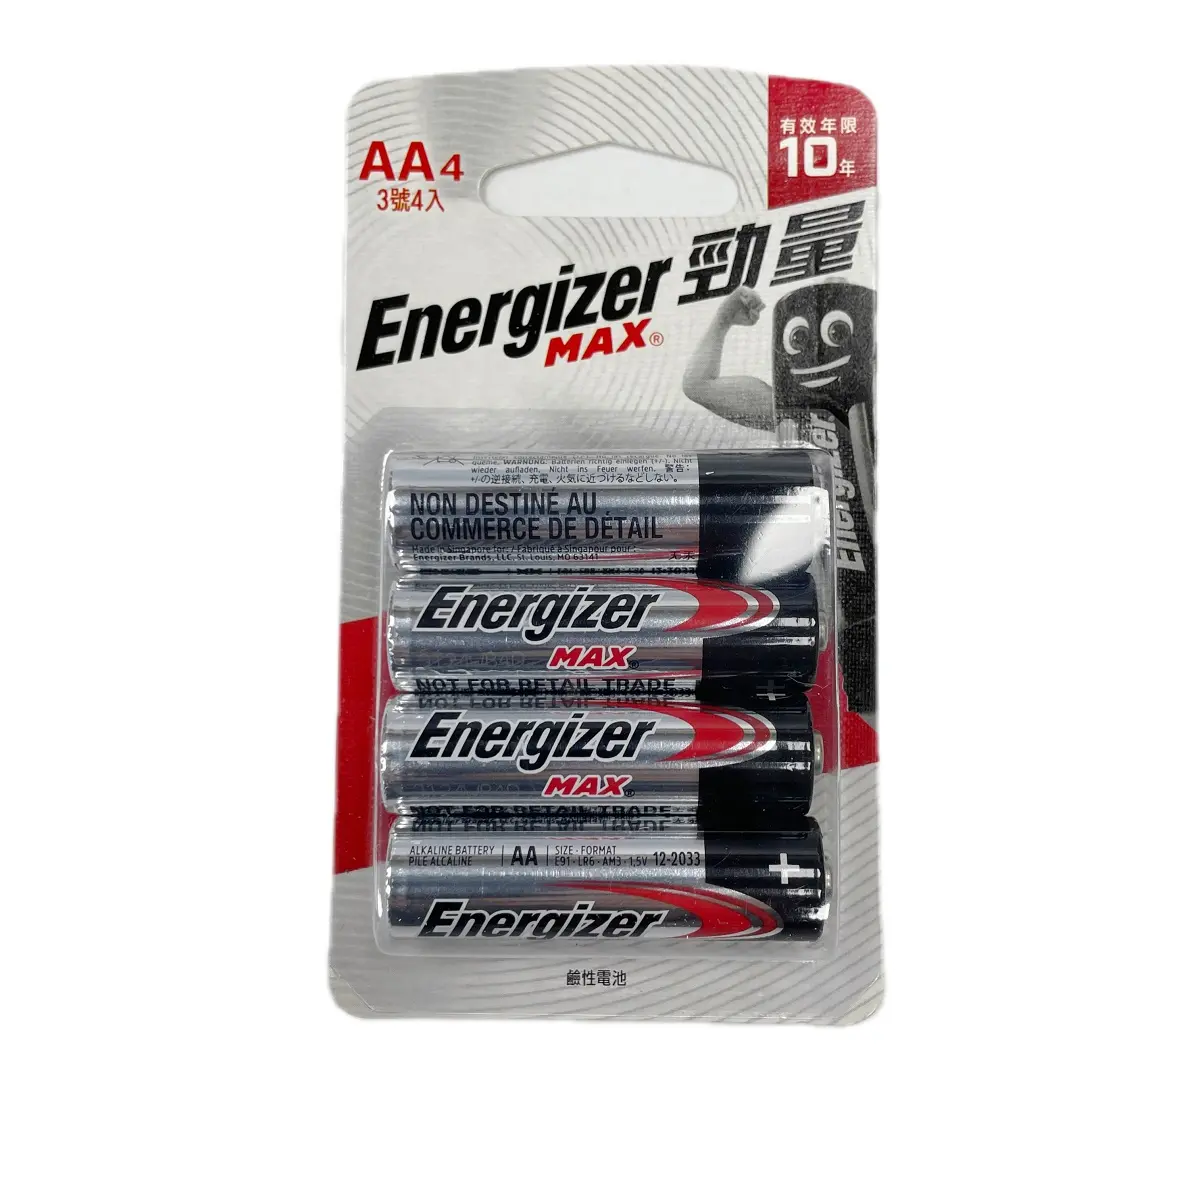 Energizer 1.5V AA AAA telecomando non ricaricabile batteria avanzata Mouse batteria senza fili alcalina